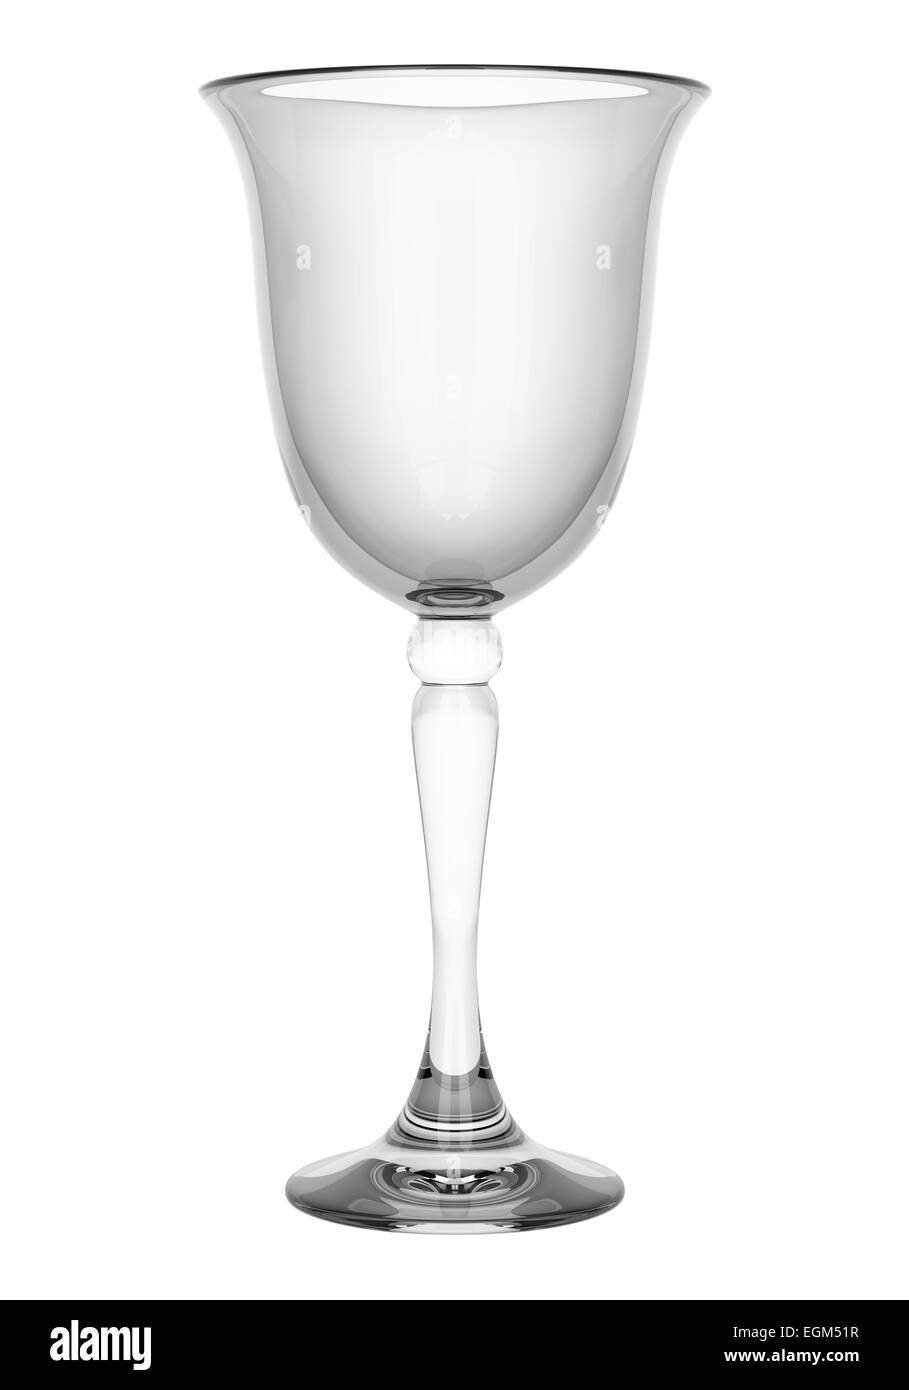 https://c8.alamy.com/comp/EGM51R/empty-wine-glass-isolated-on-white-background-EGM51R.jpg